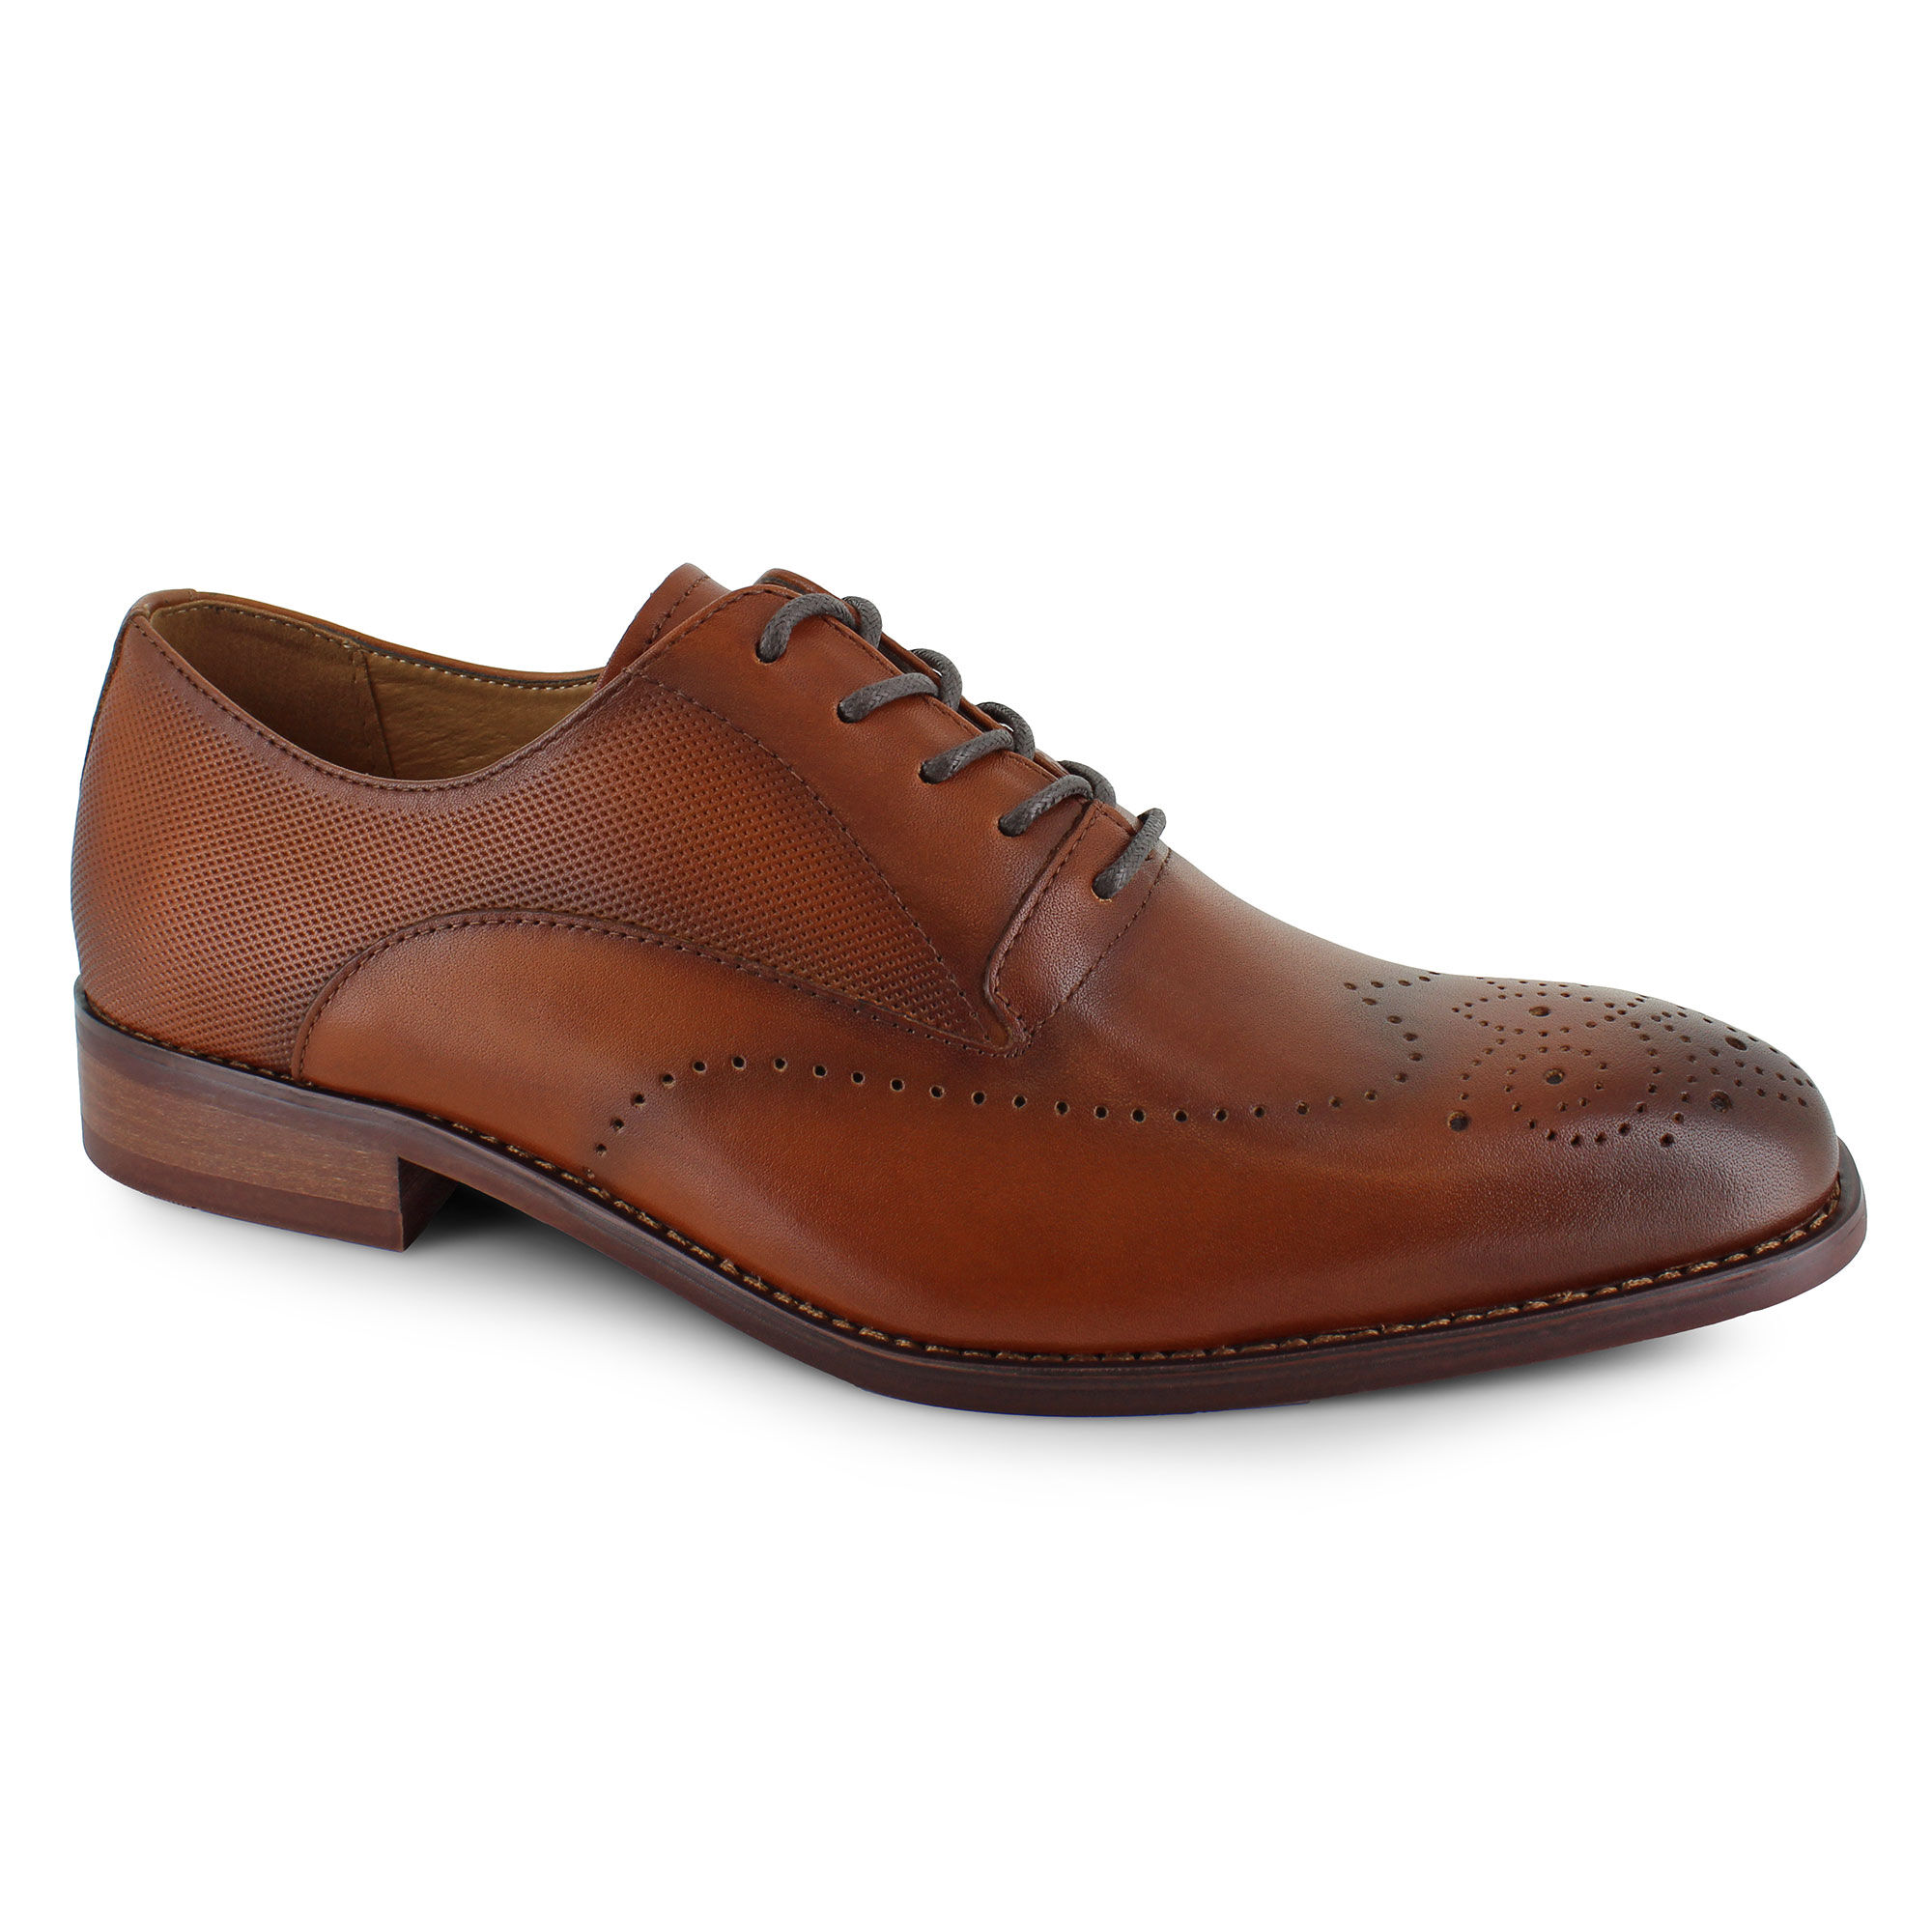 La Milano Men's Cognac Brown Wing Tip Oxford Leather Dress Shoes A11320 